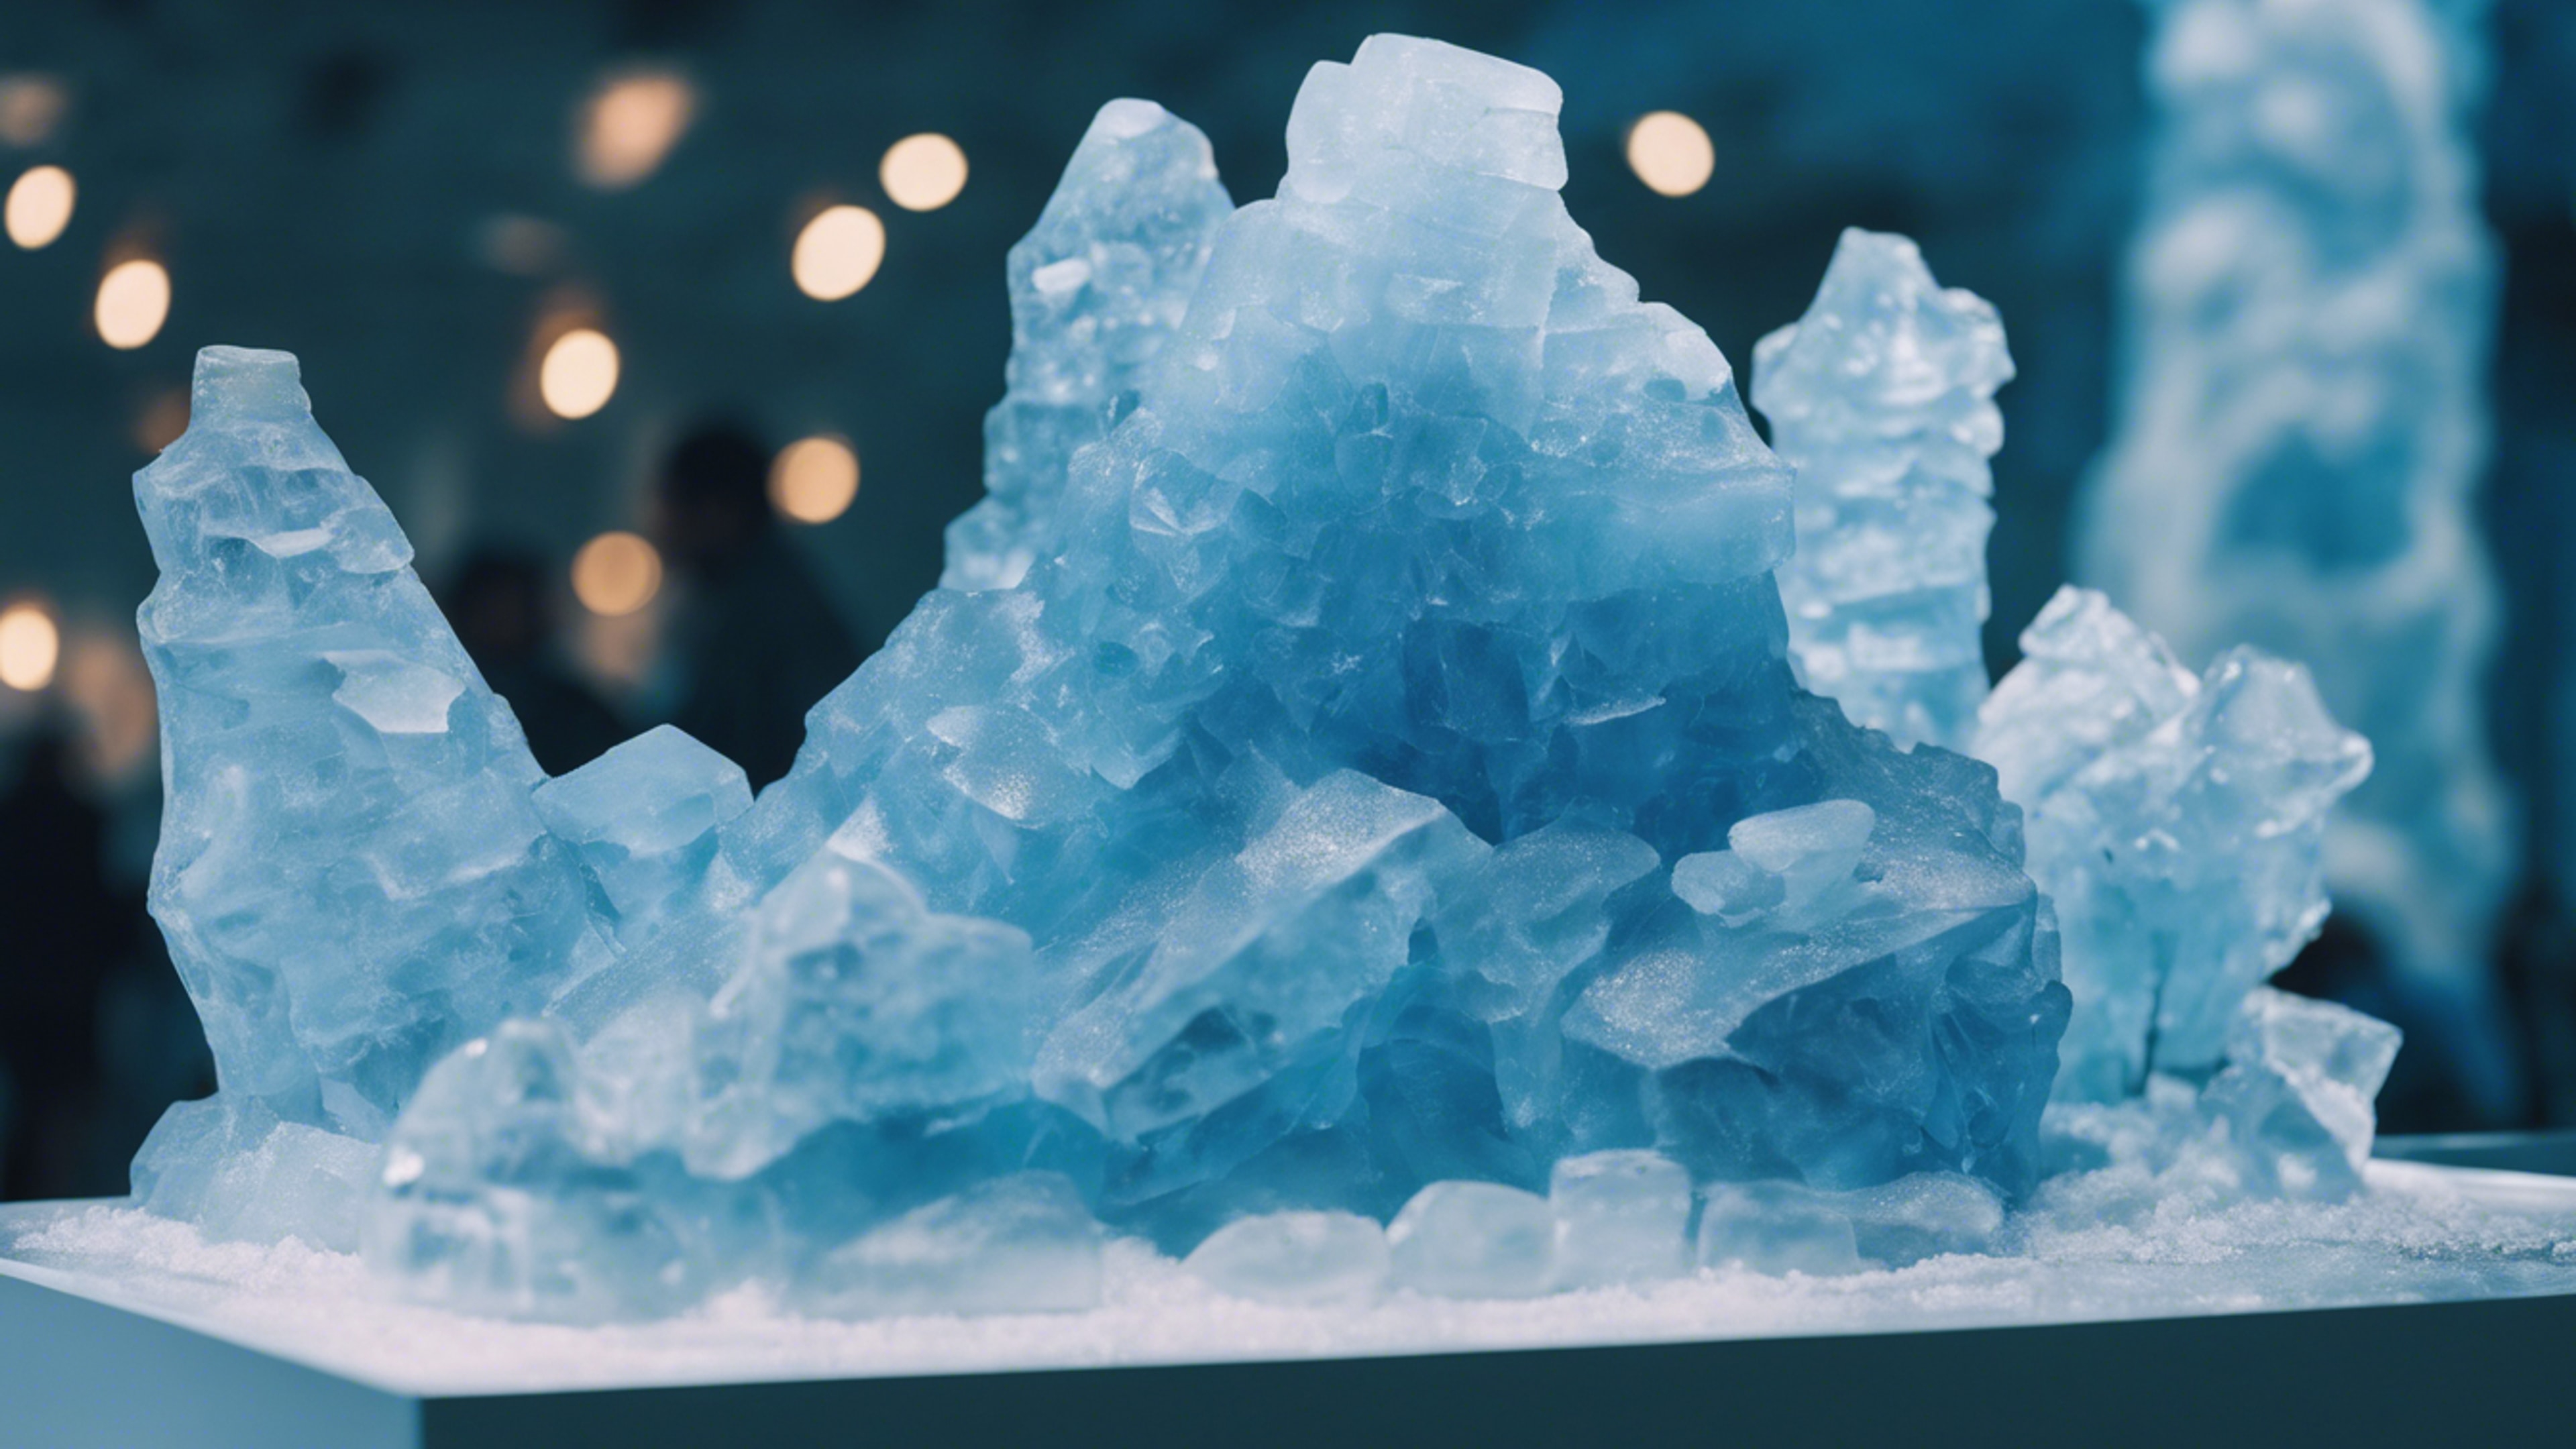 A cool blue ice sculpture displayed in an art exhibition Sfondo[01392a1631a945a38e16]